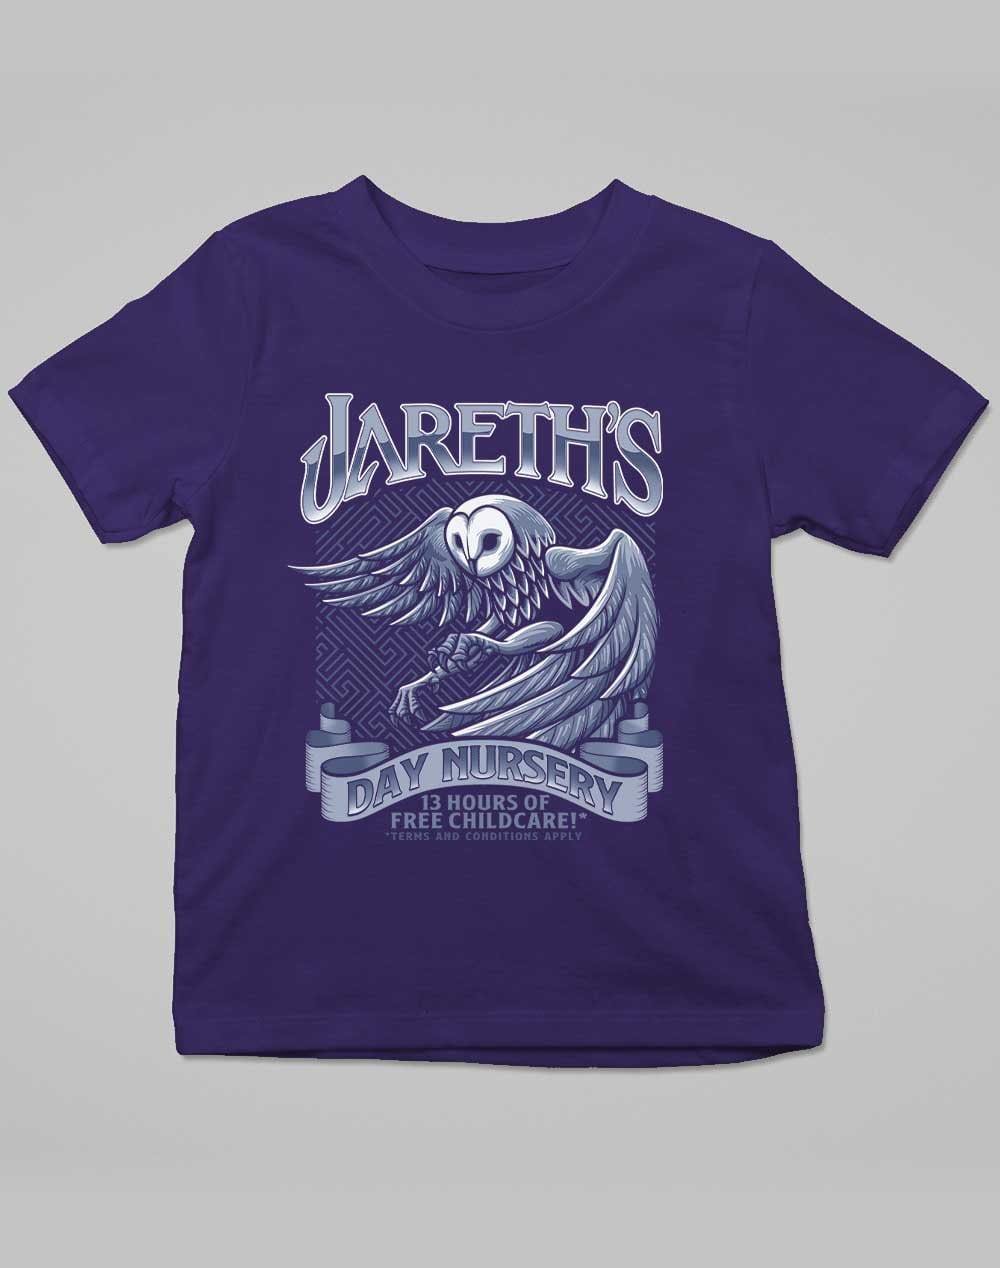 Jareth's Day Nursery Kids T-Shirt 3-4 years / Navy  - Off World Tees